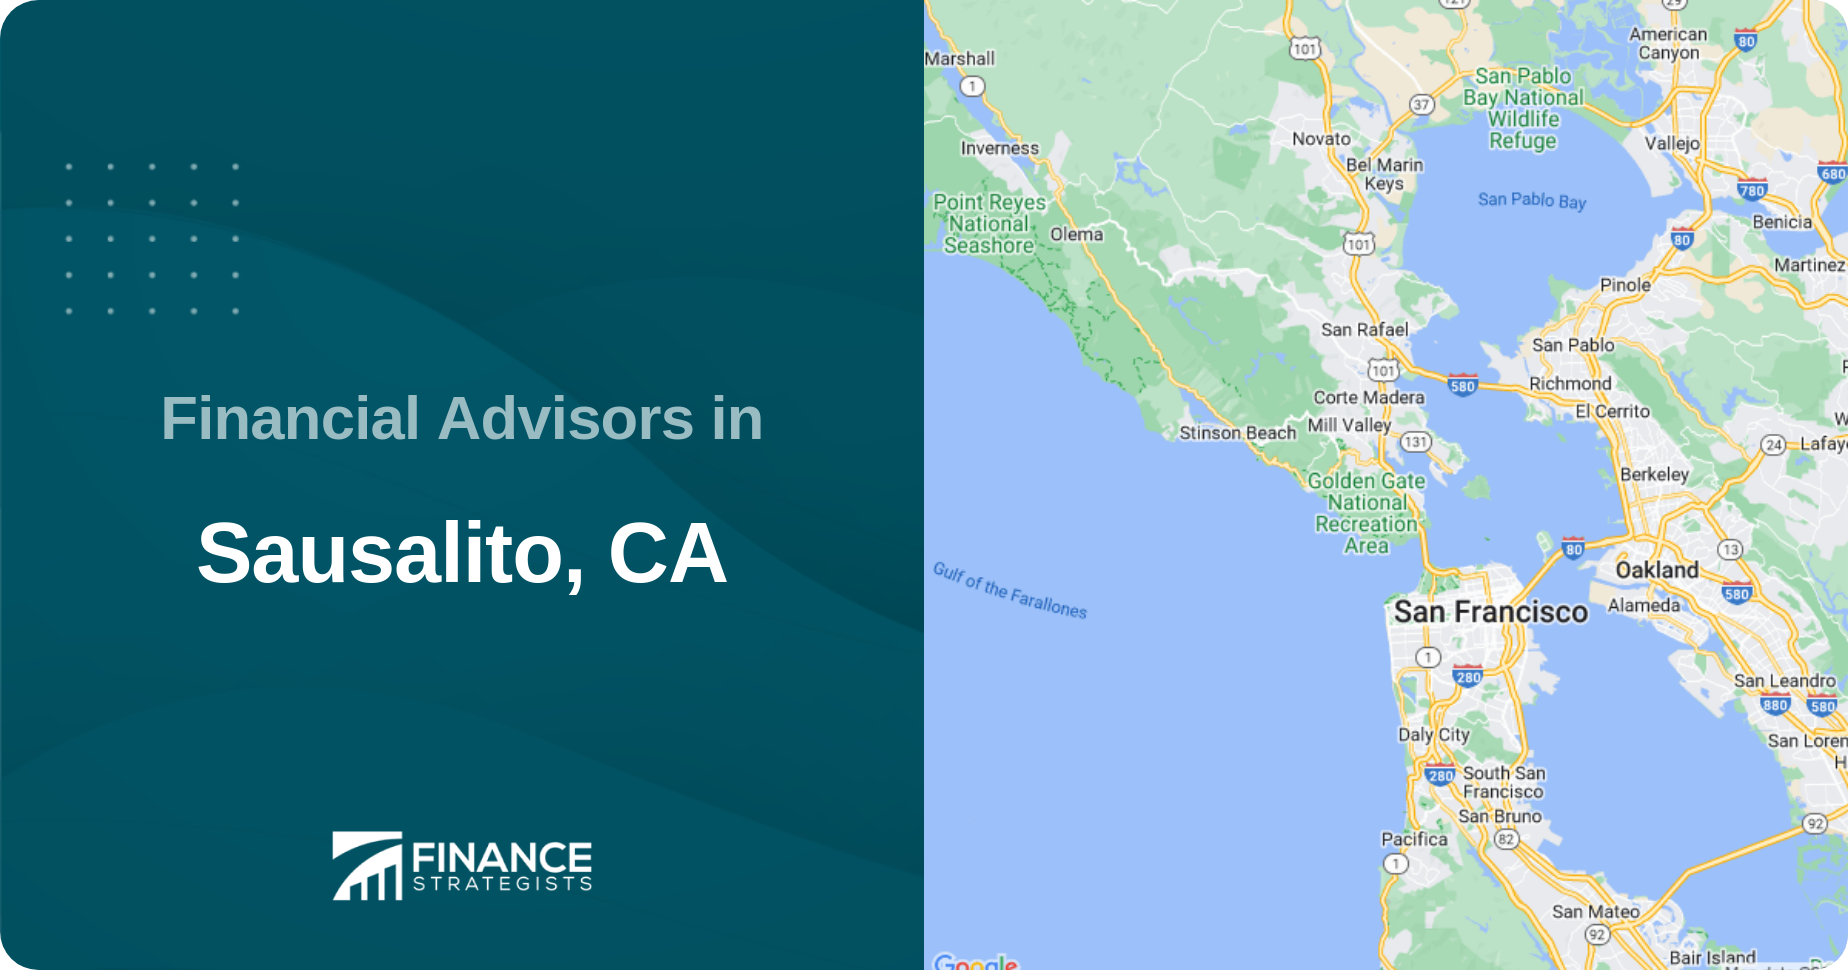 Financial Advisors in Sausalito, CA